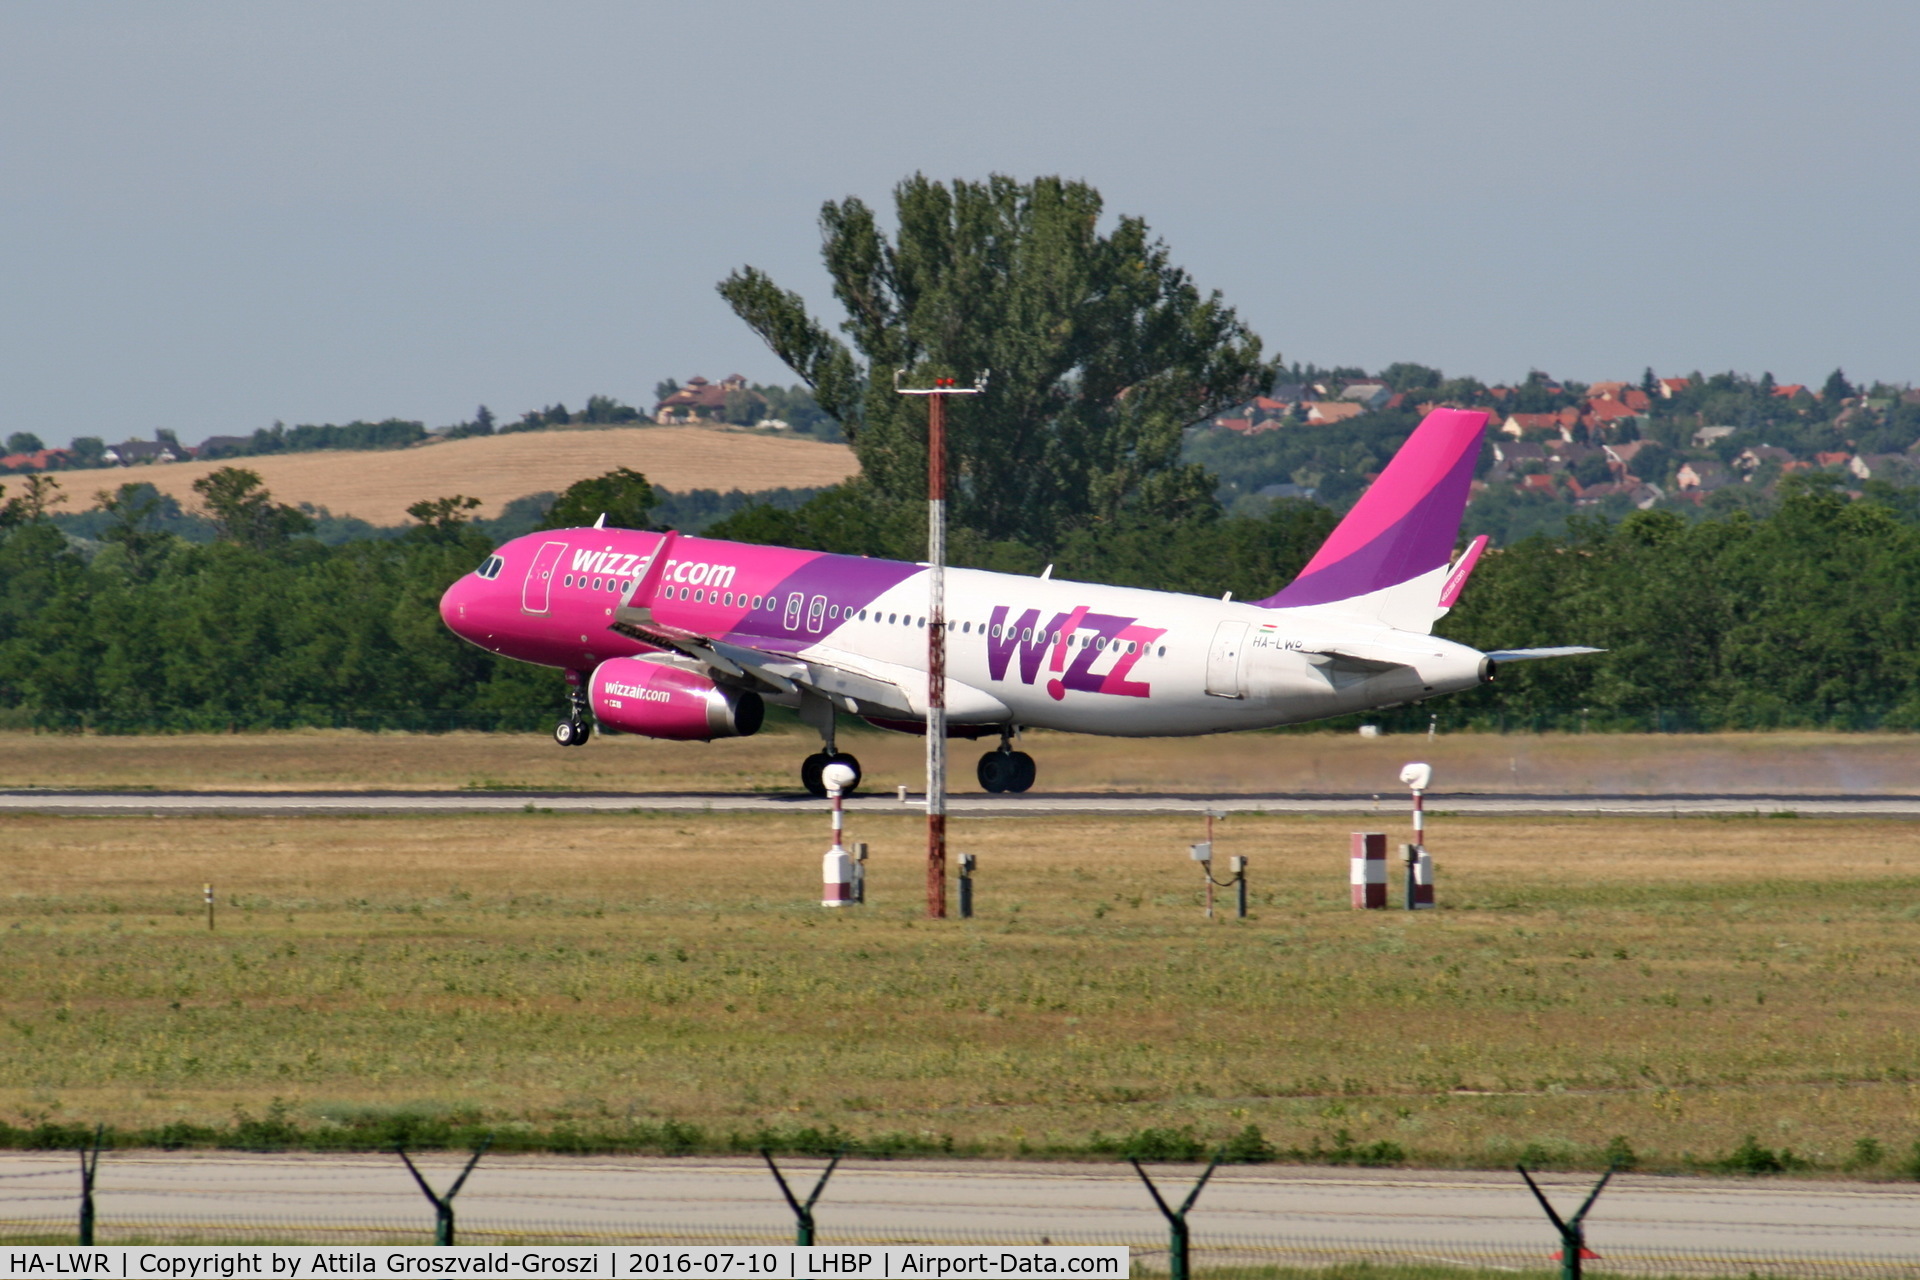 HA-LWR, 2013 Airbus A320-232 C/N 5604, Budapest Airport, Hungary - Landing